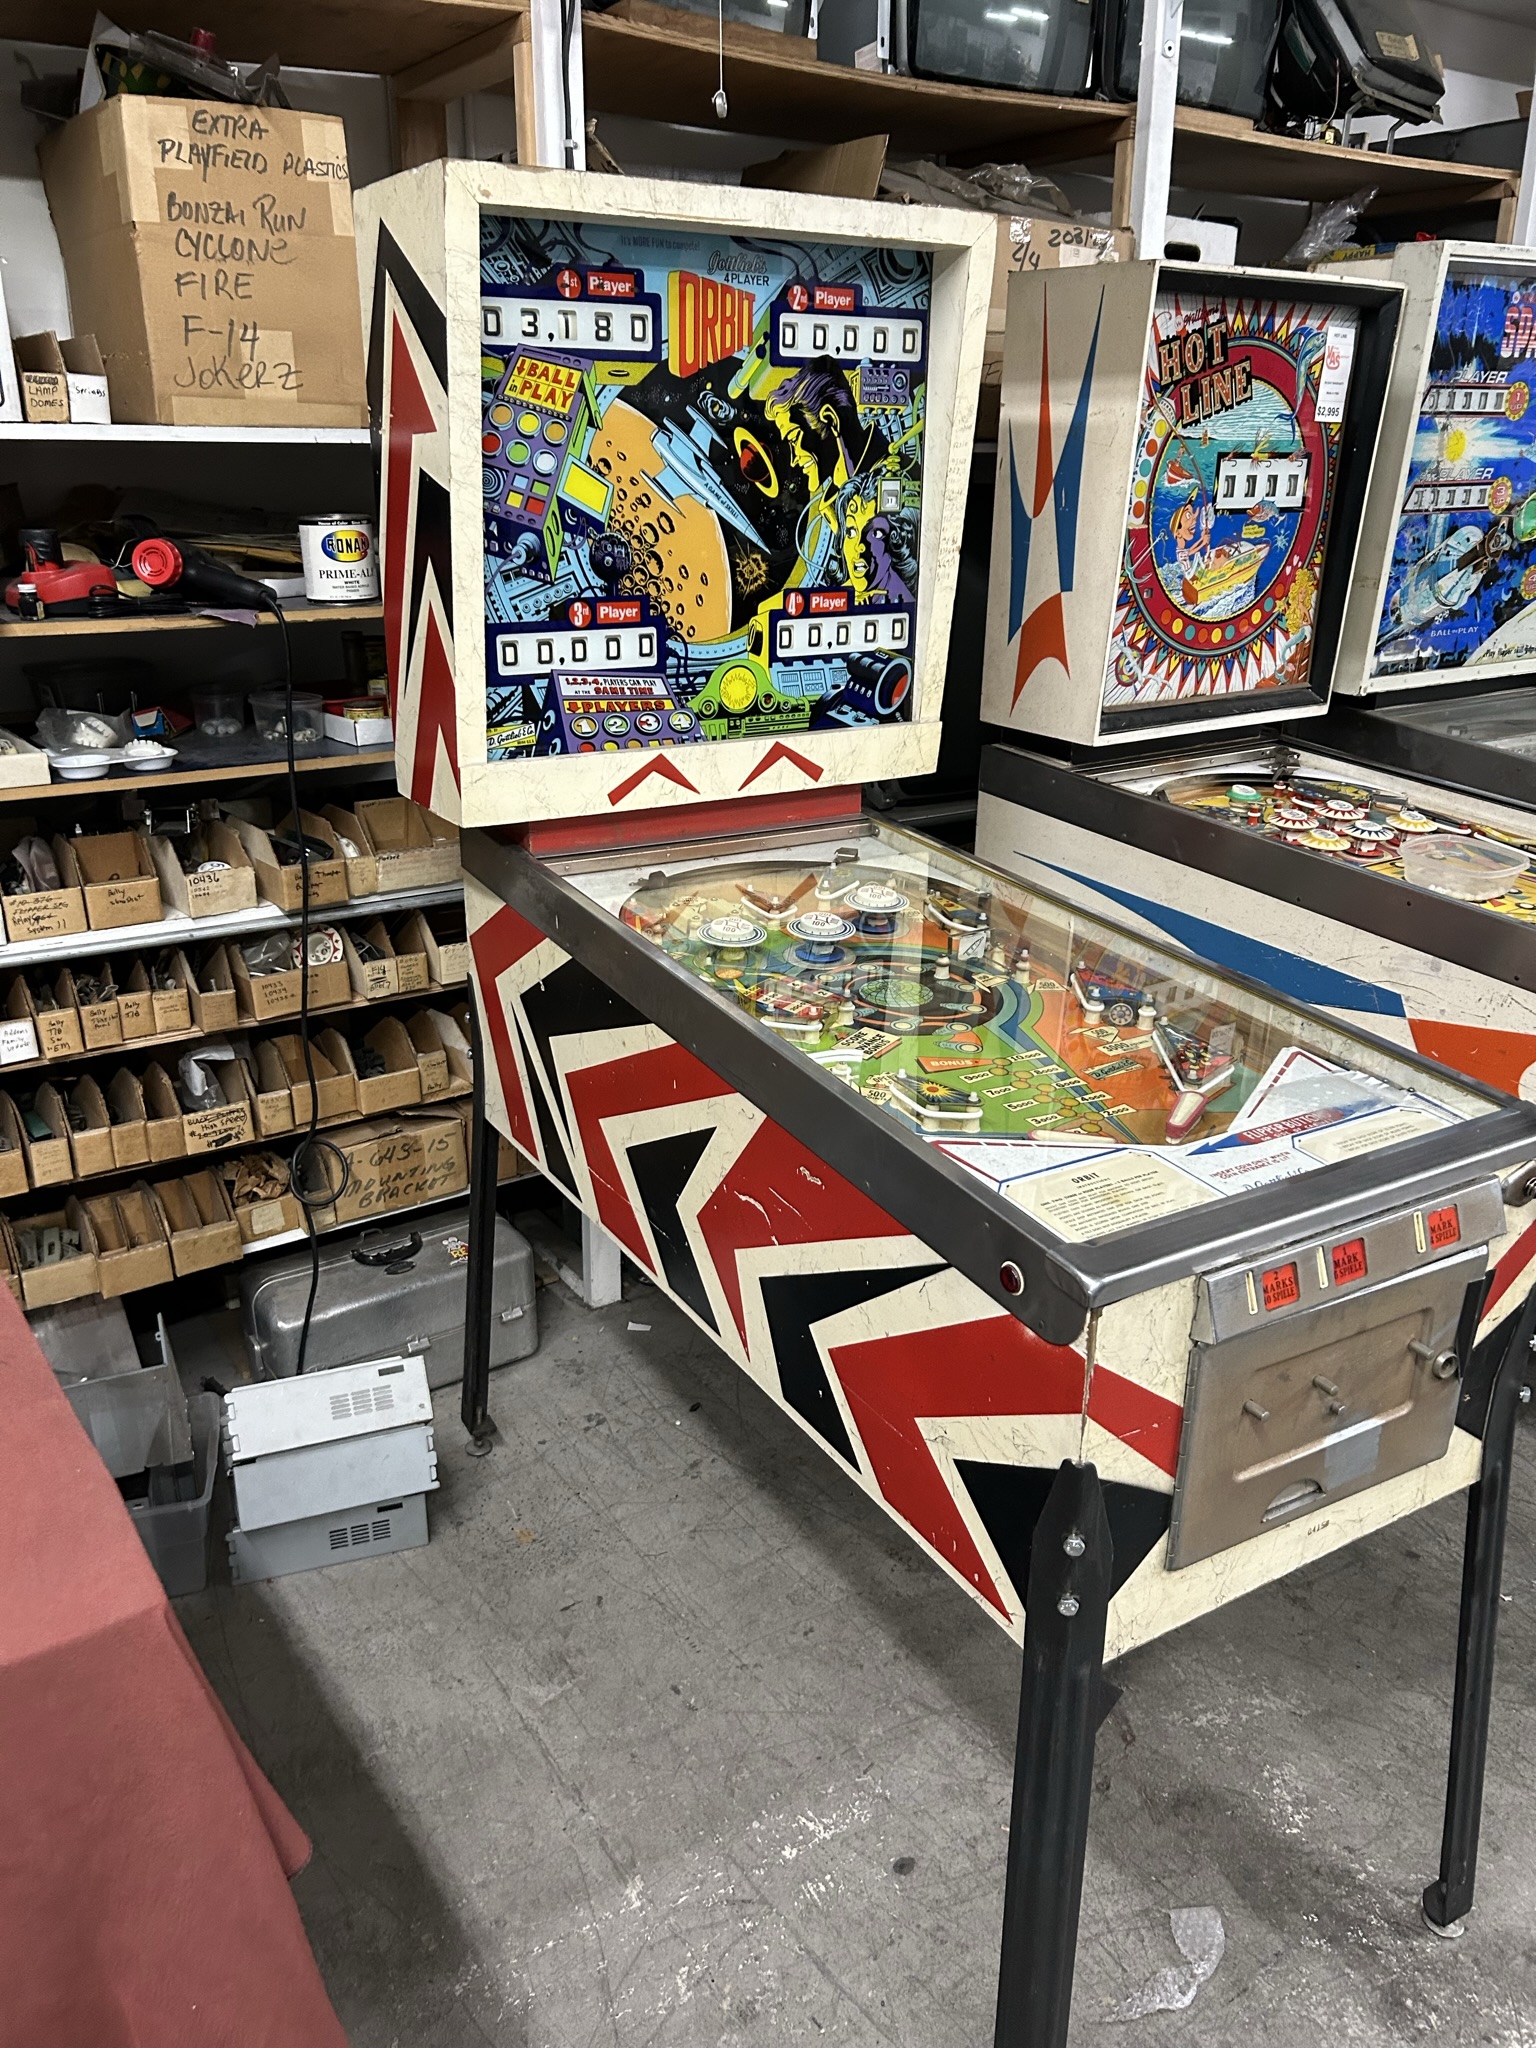 Orbit pinball game for sale- Vintage Arcade Superstore